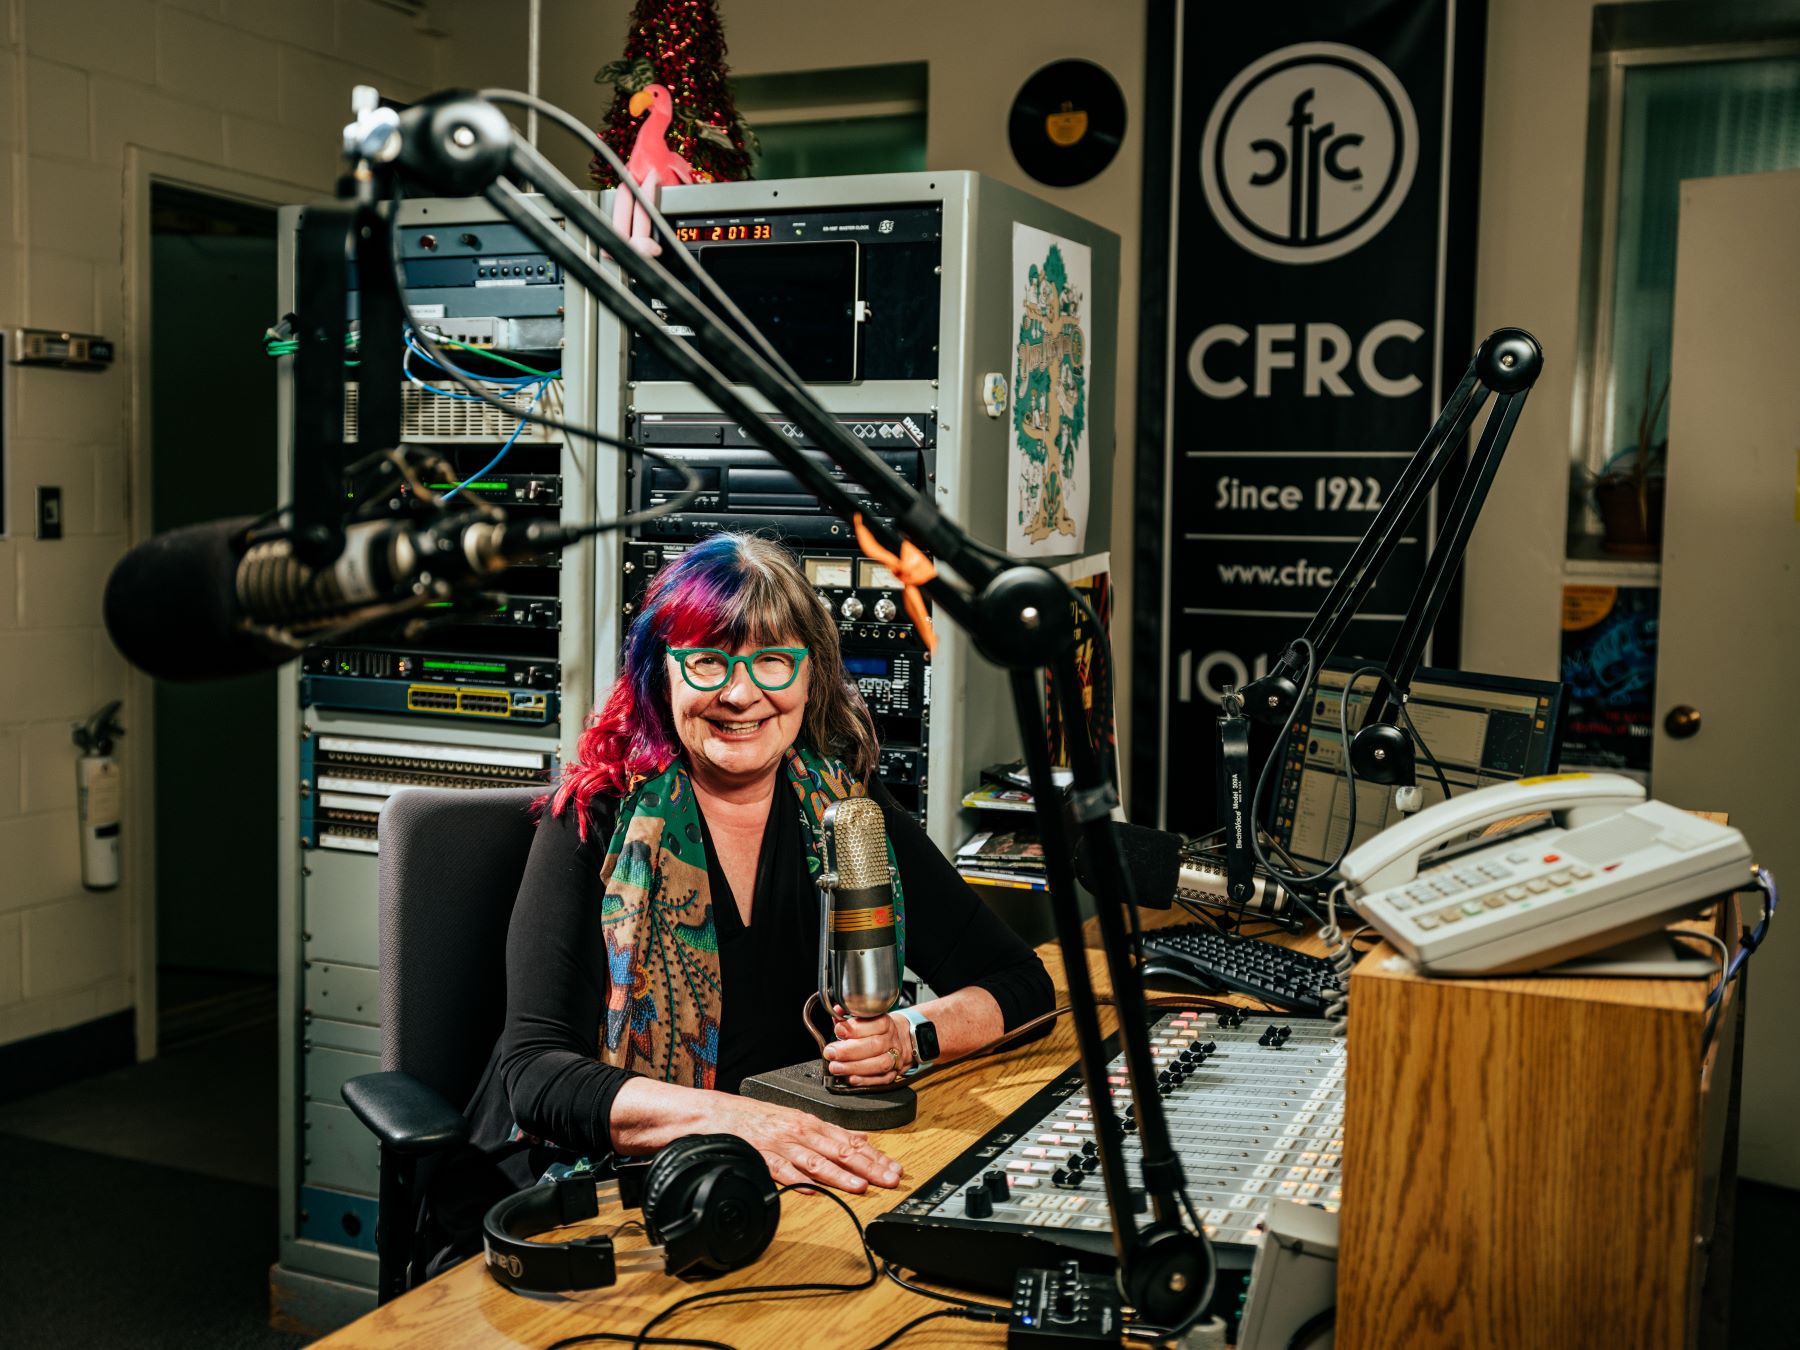 Woman sitting in CFRC radio booth